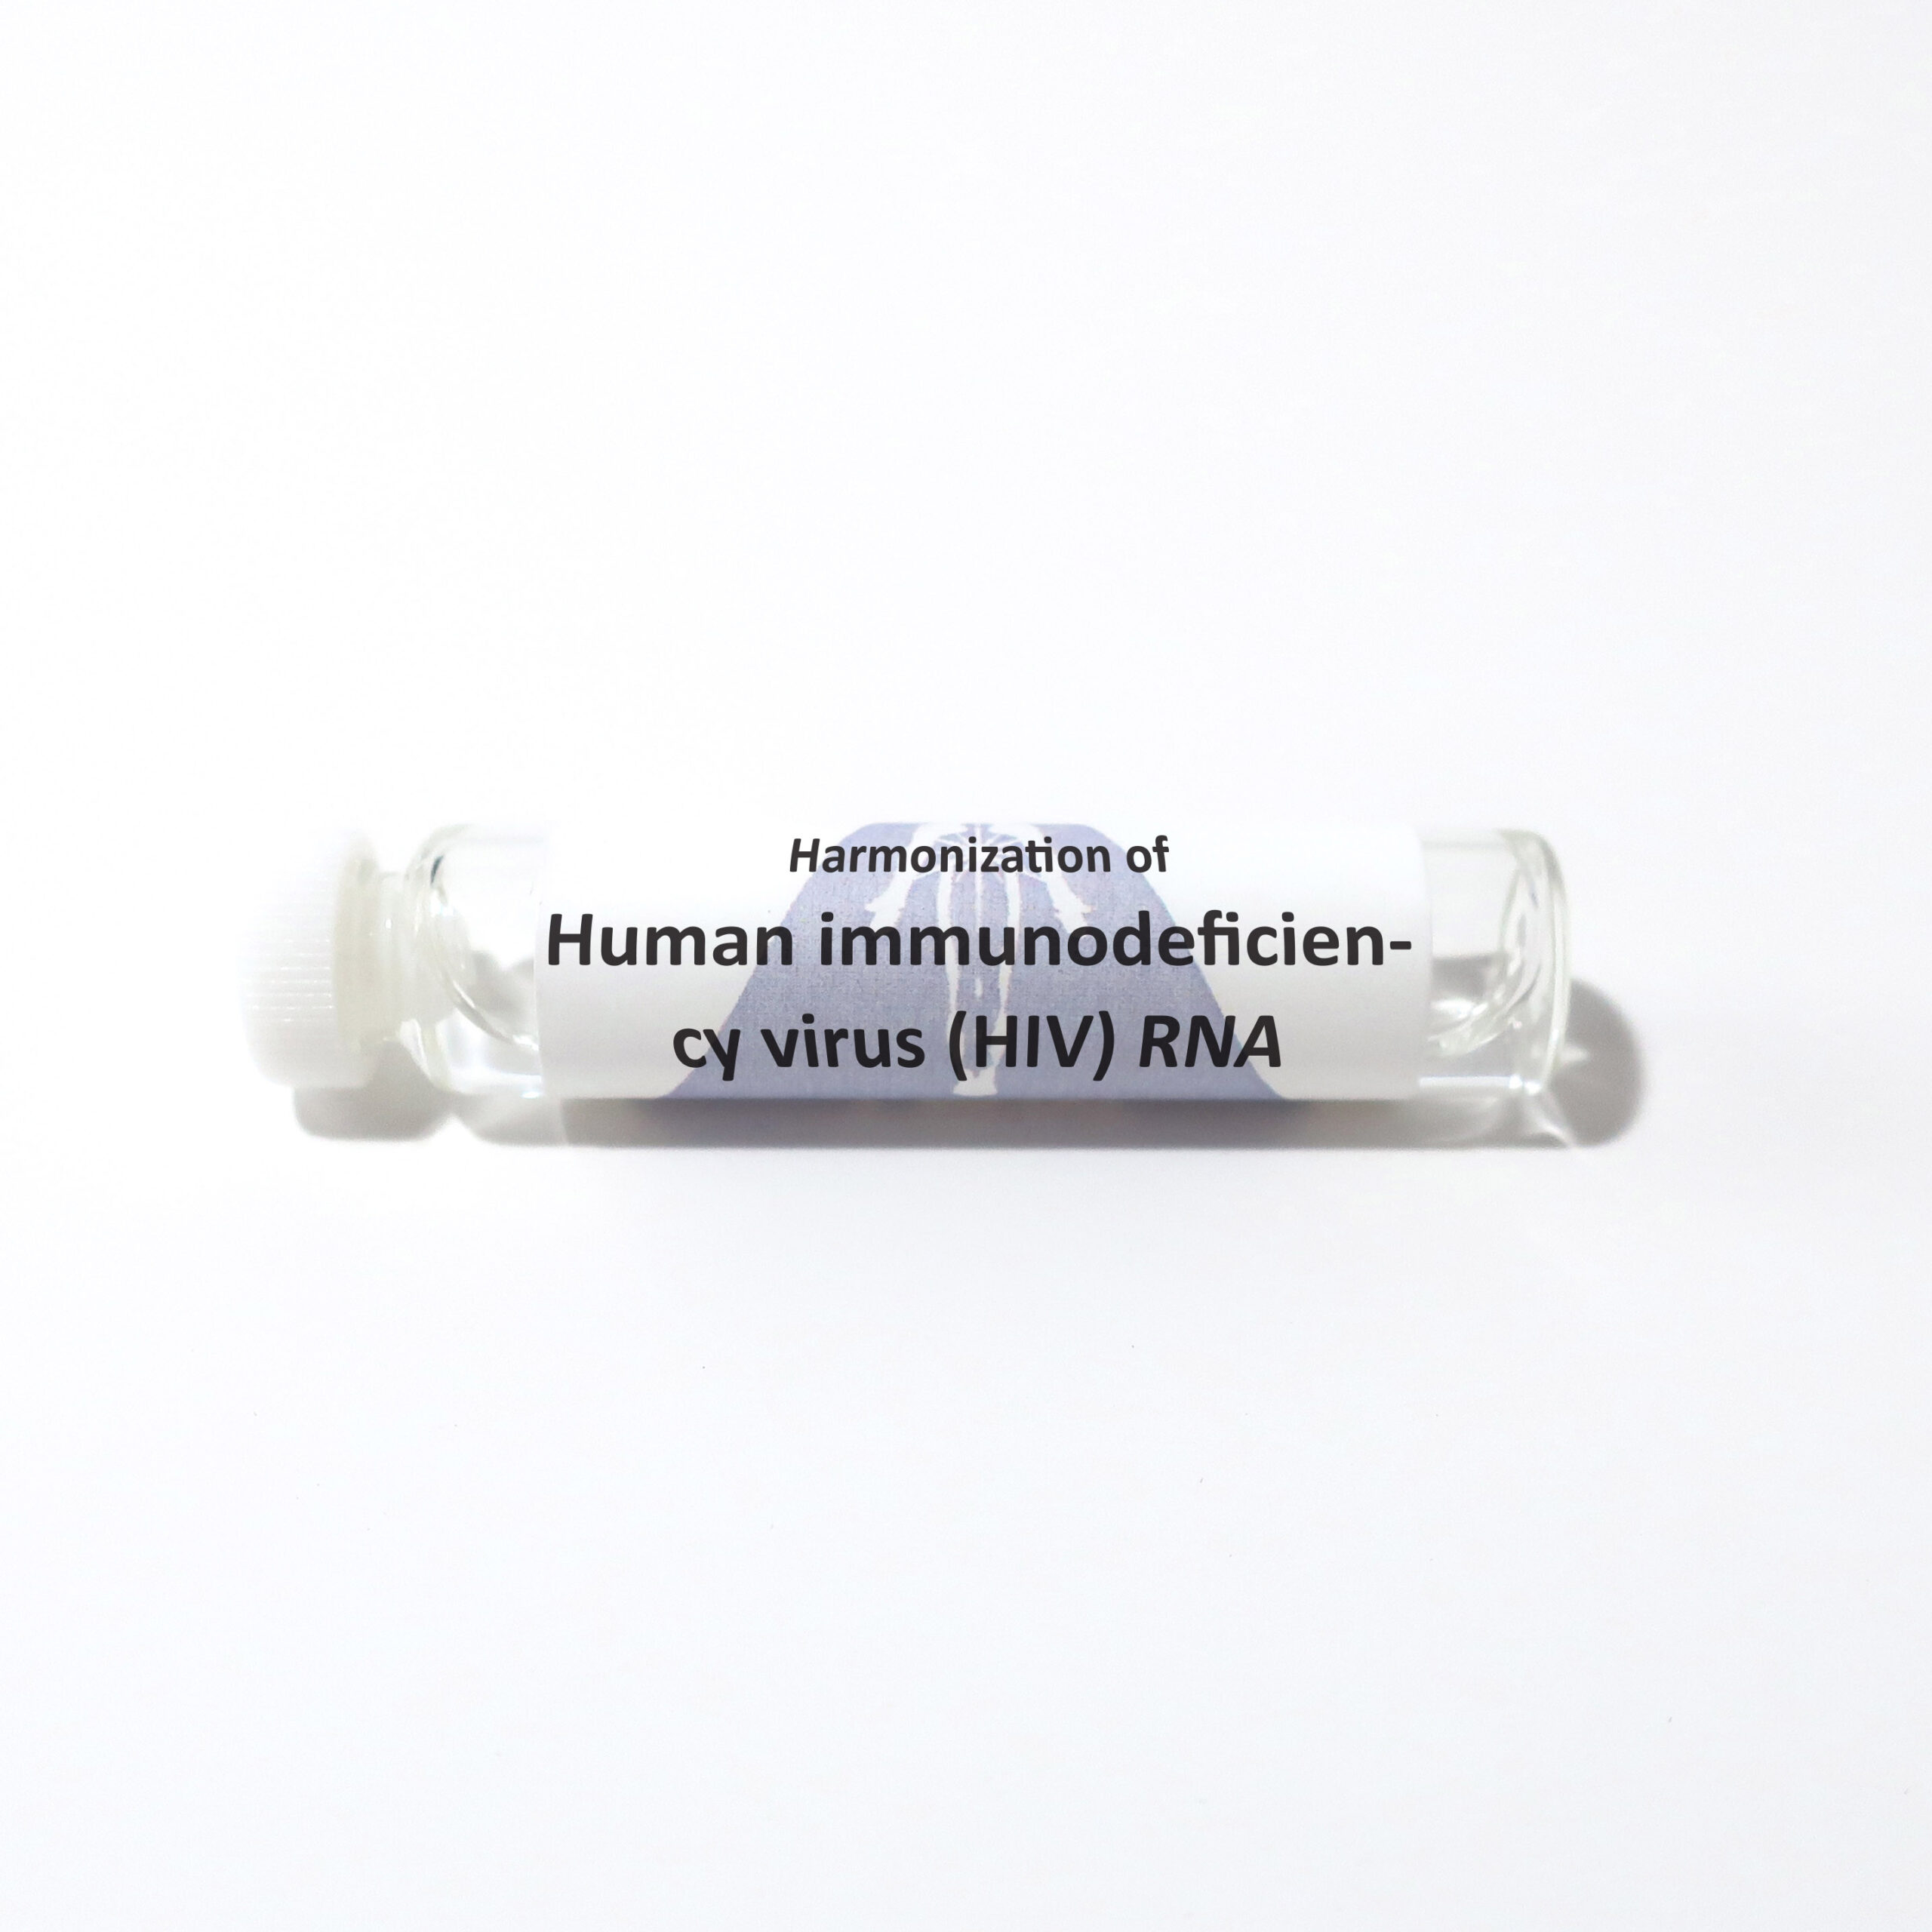 Human immunodeficiency virus (HIV) RNA